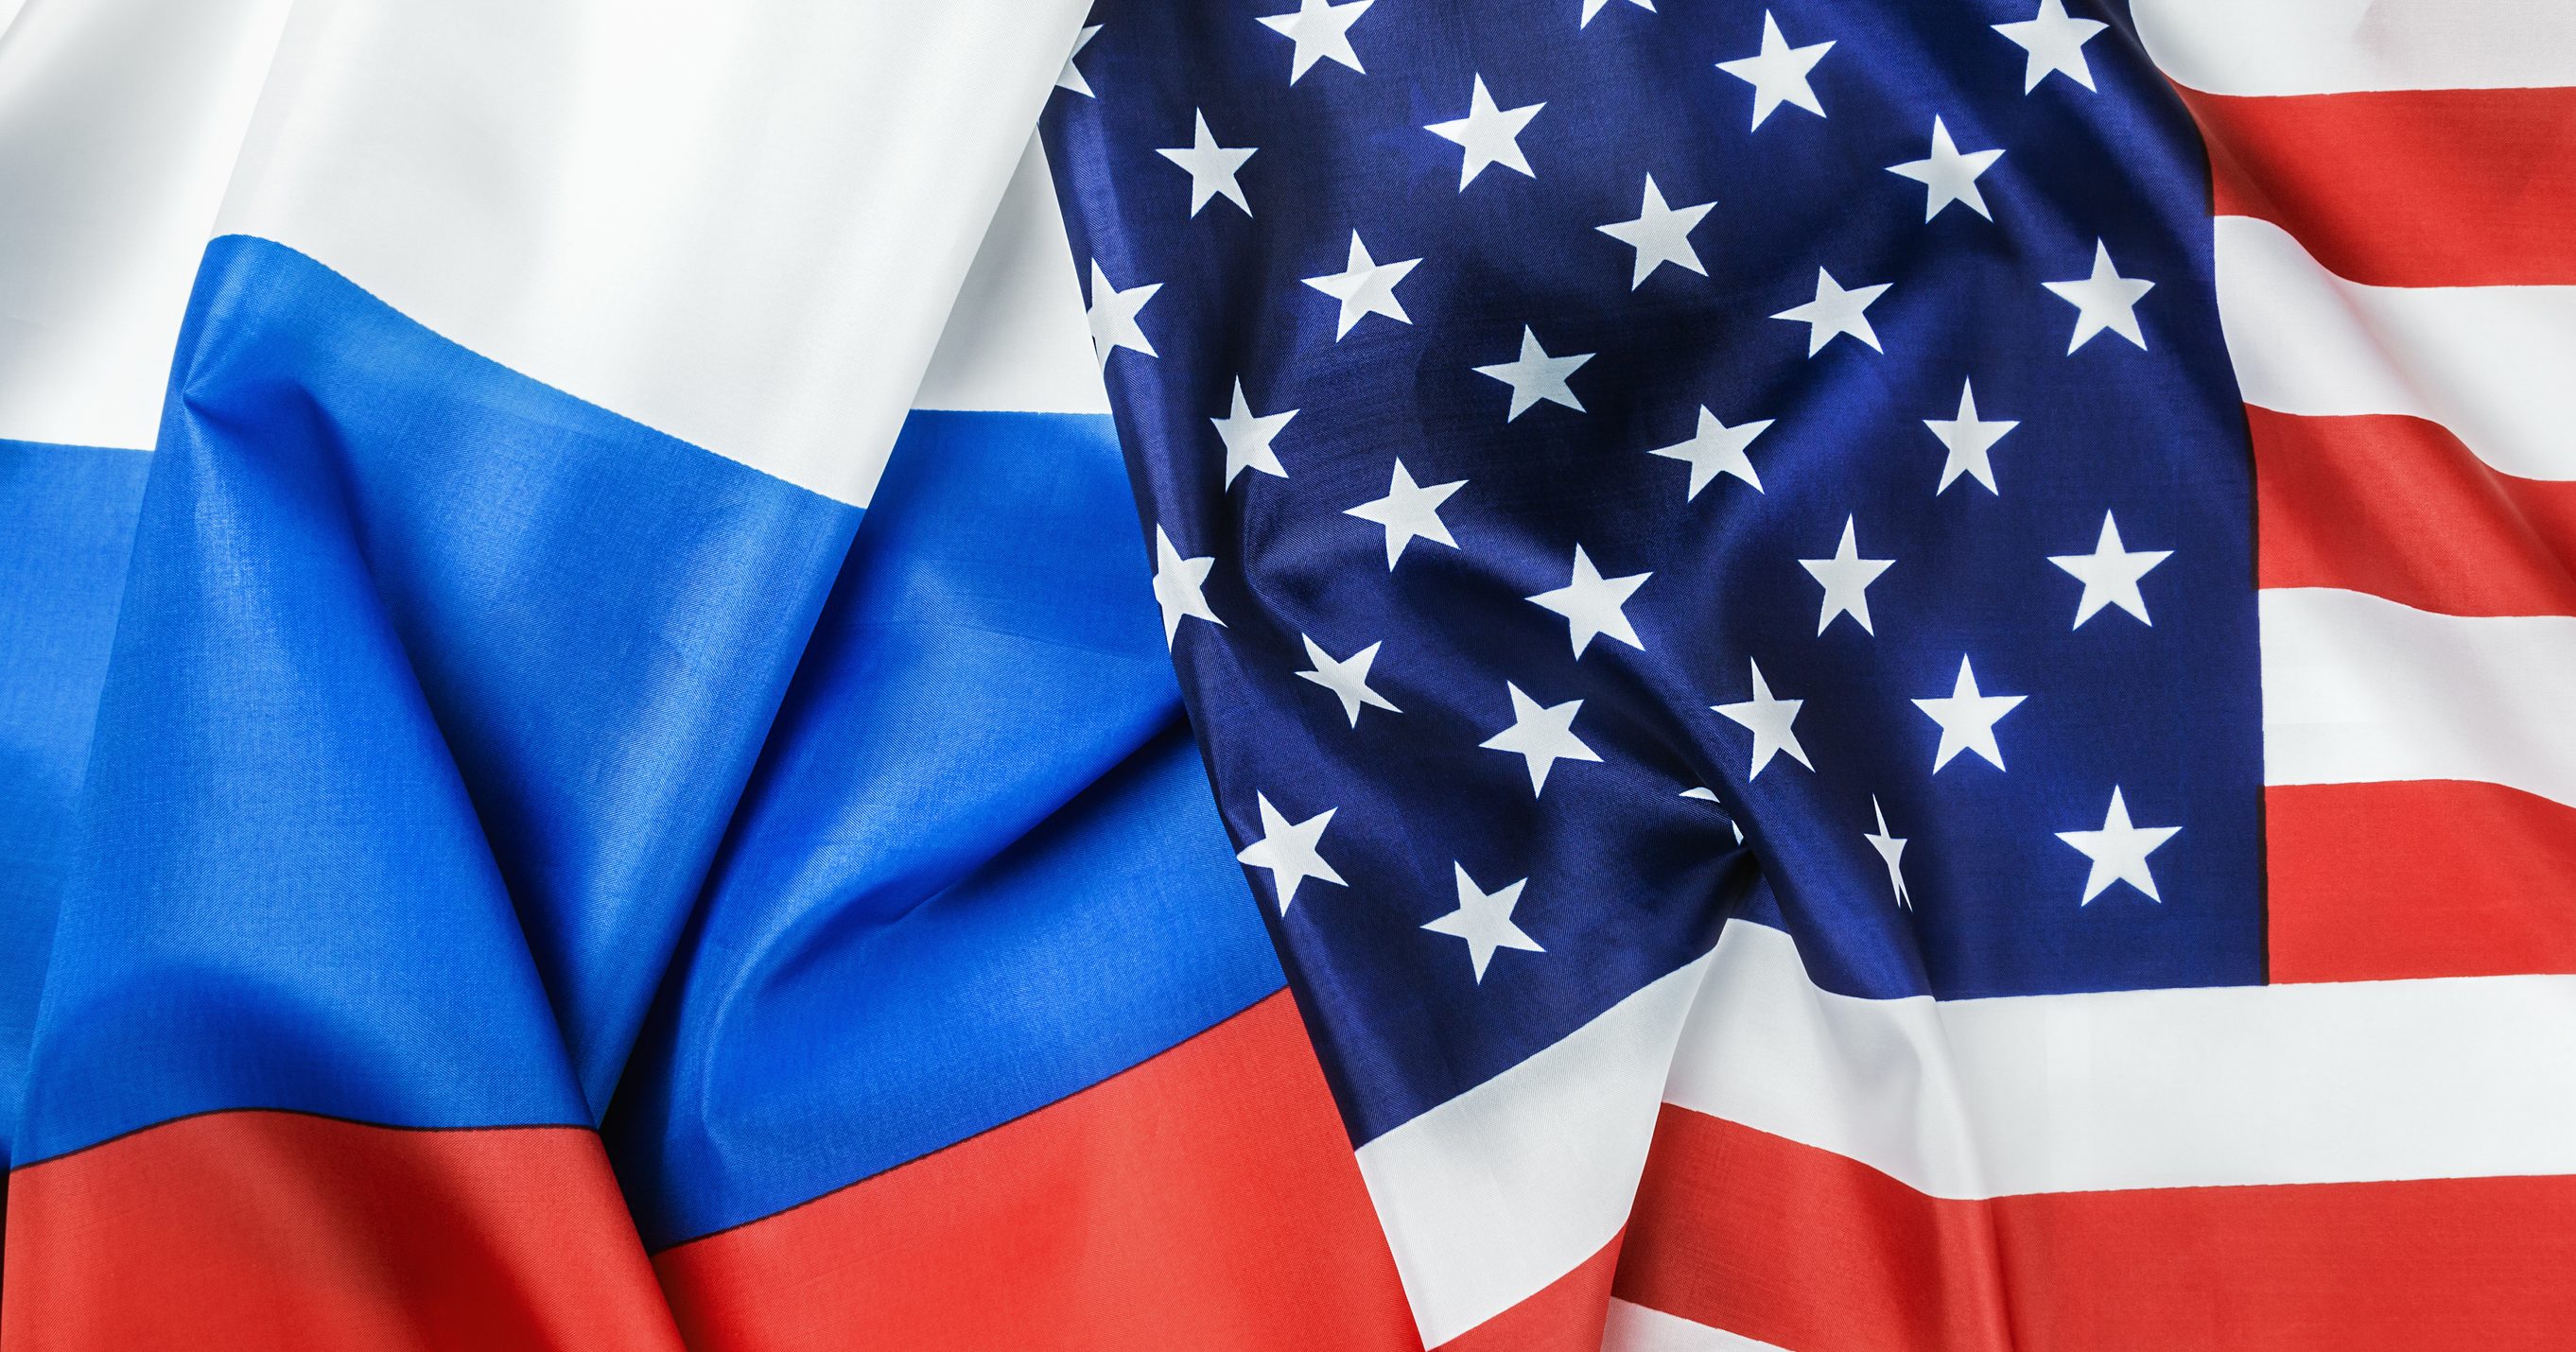 American in russia. США РФ флаг. Россия и США. Российский и американский флаги. Флаг России и США.